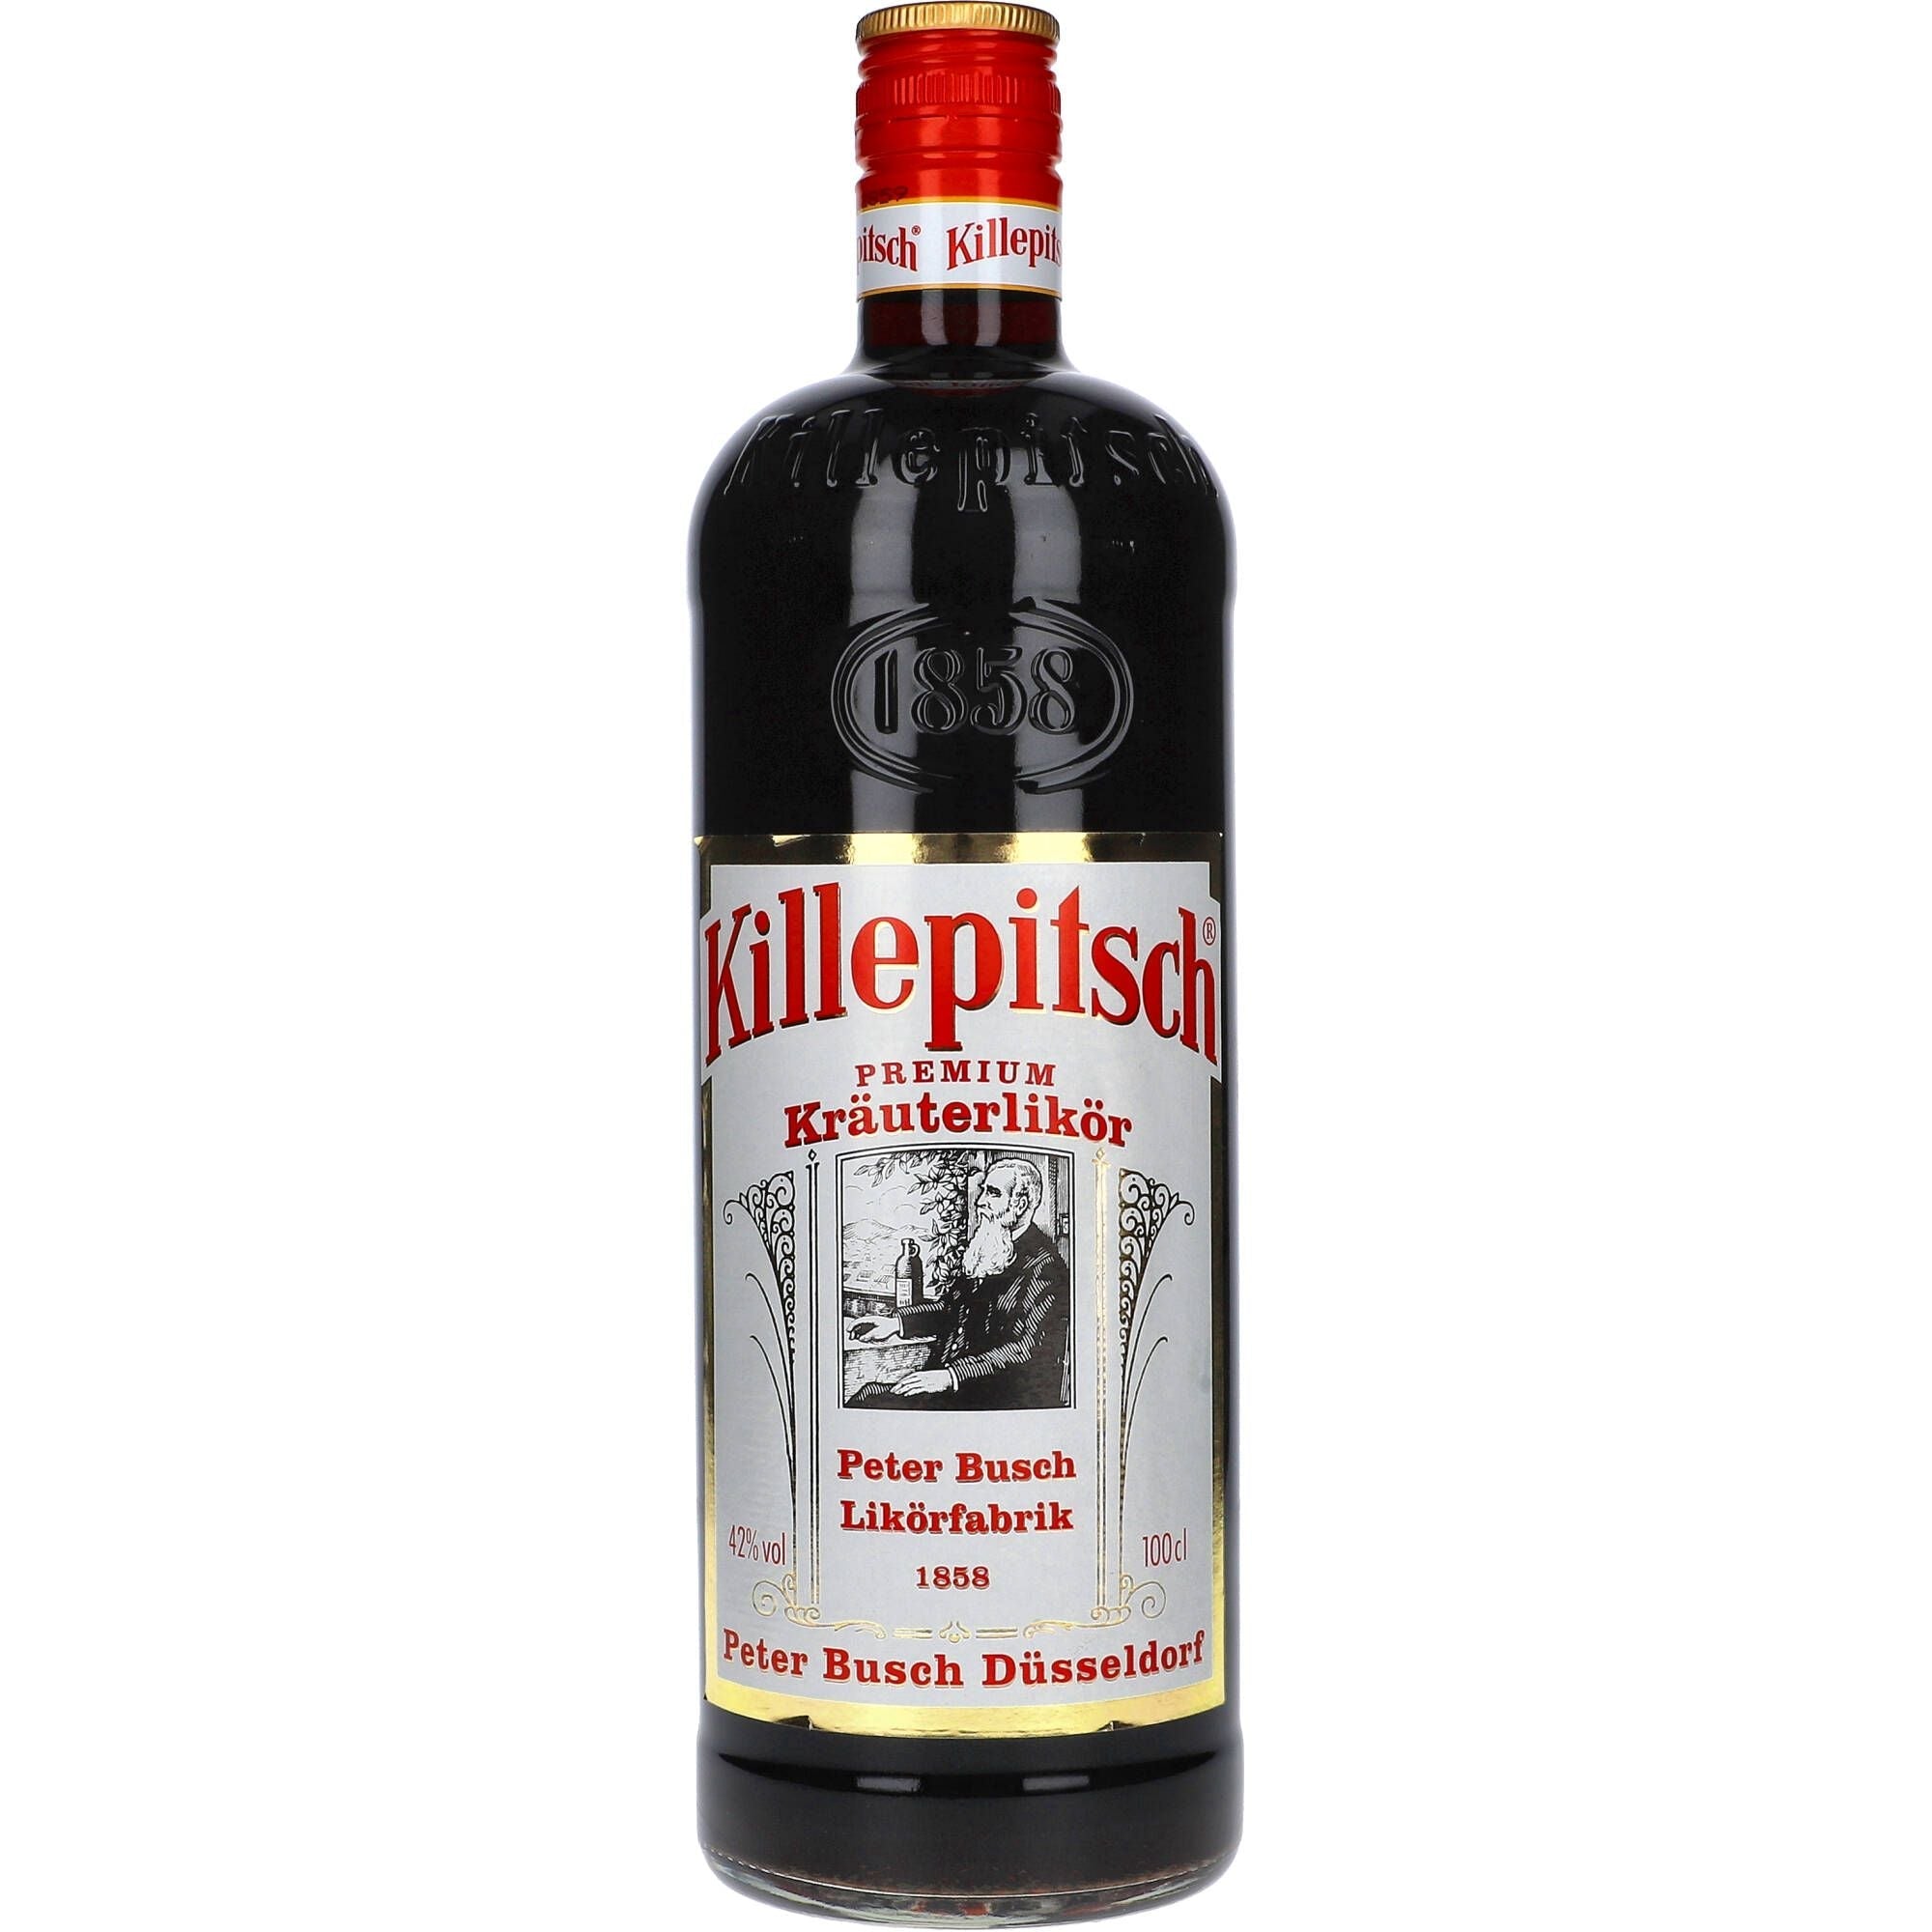 Killepitsch ltr. 42% 1 AllSpirits –